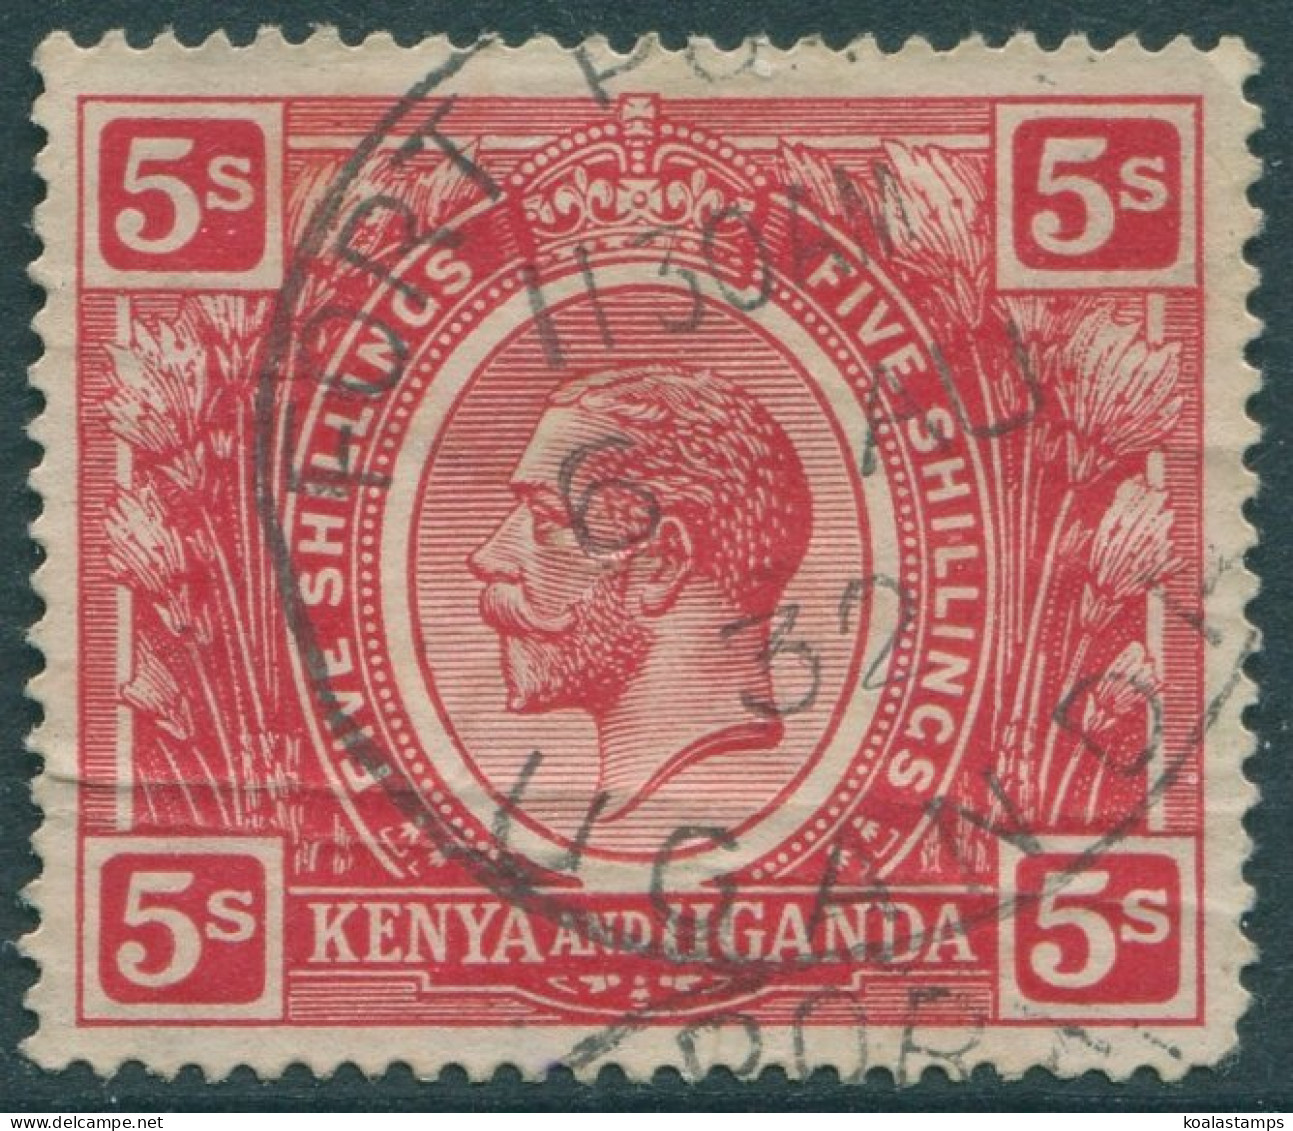 Kenya Uganda And Tanganyika 1922 SG92 5s Carmine-red KGV FU (amd) - Kenya, Uganda & Tanganyika